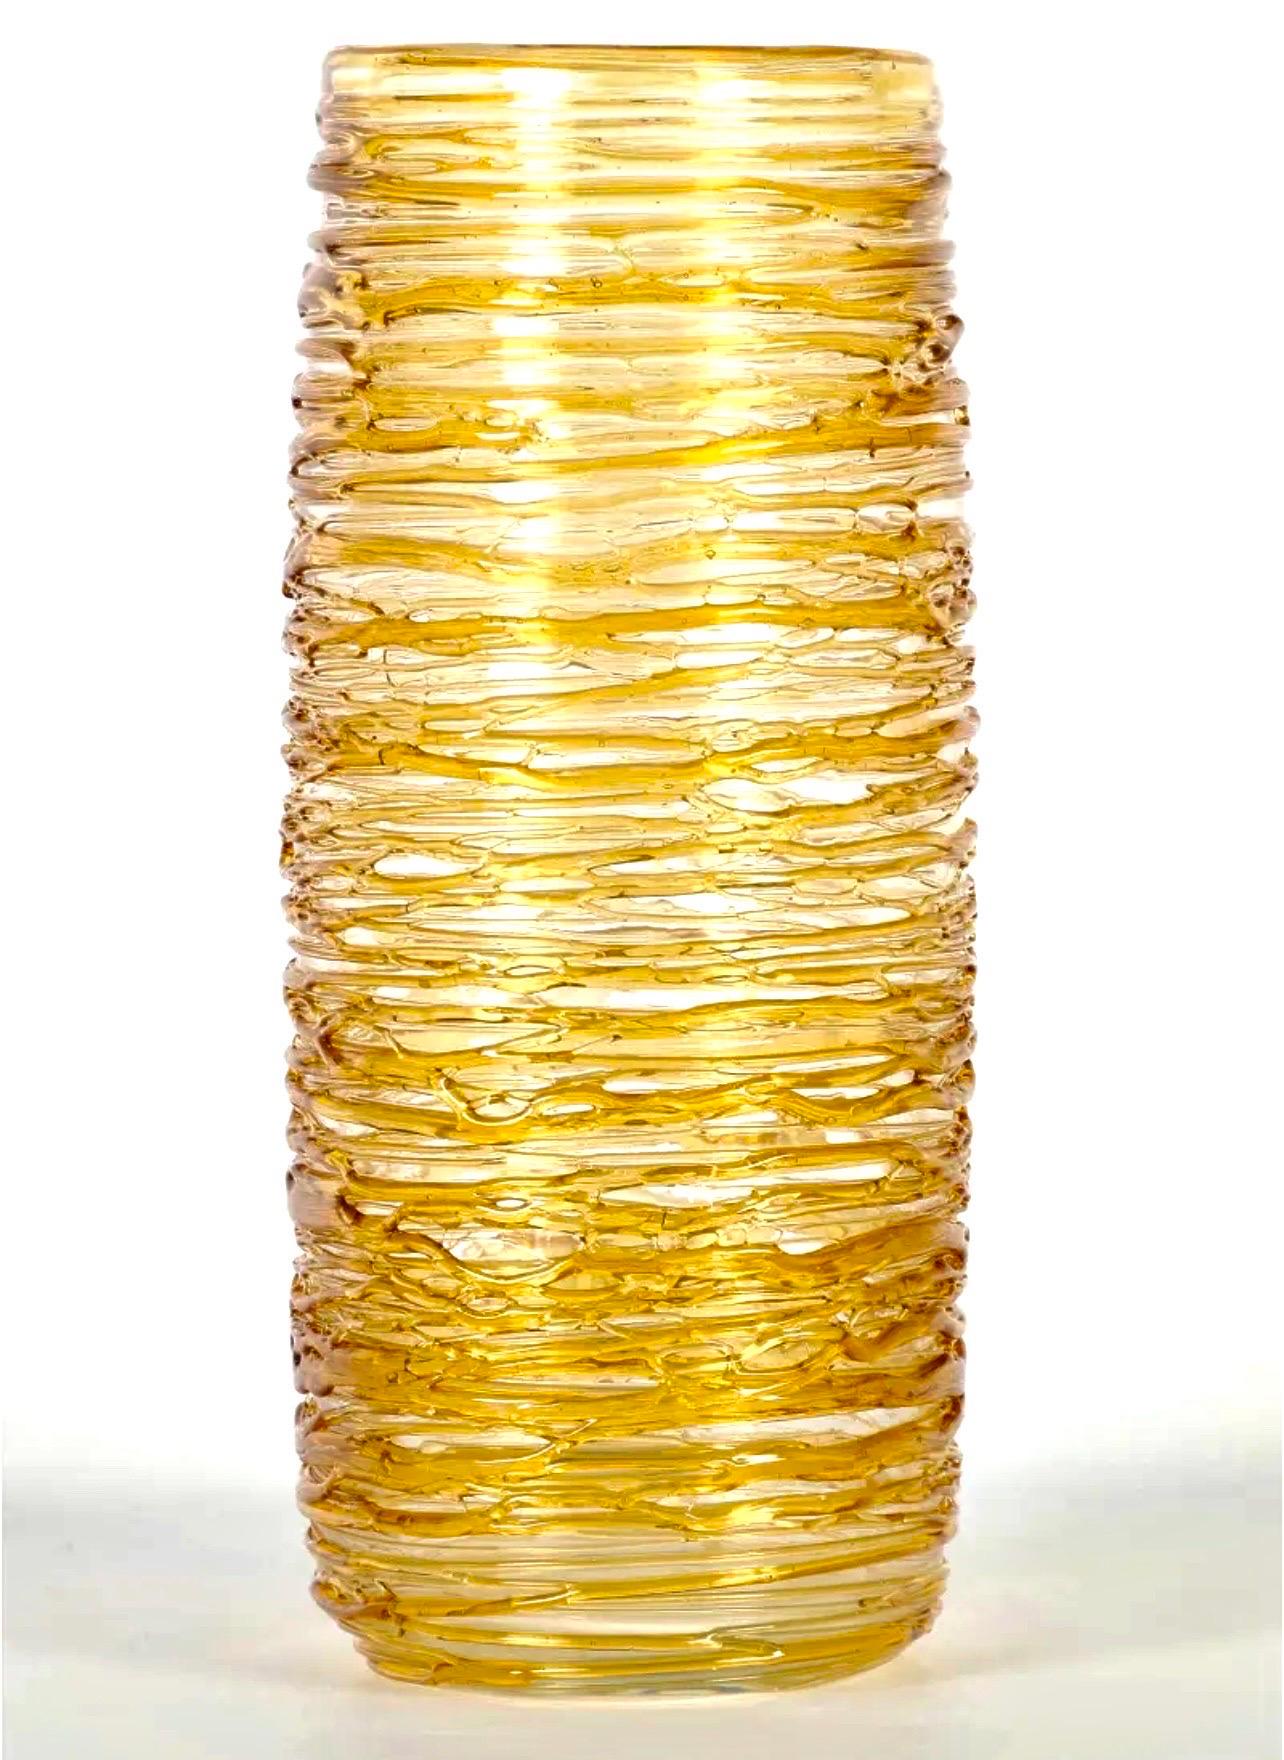 Grande sculpture abstraite en verre de Murano soufflé dorée et transparente de Constantini - Mixed Media Art de Sergio Costantini 